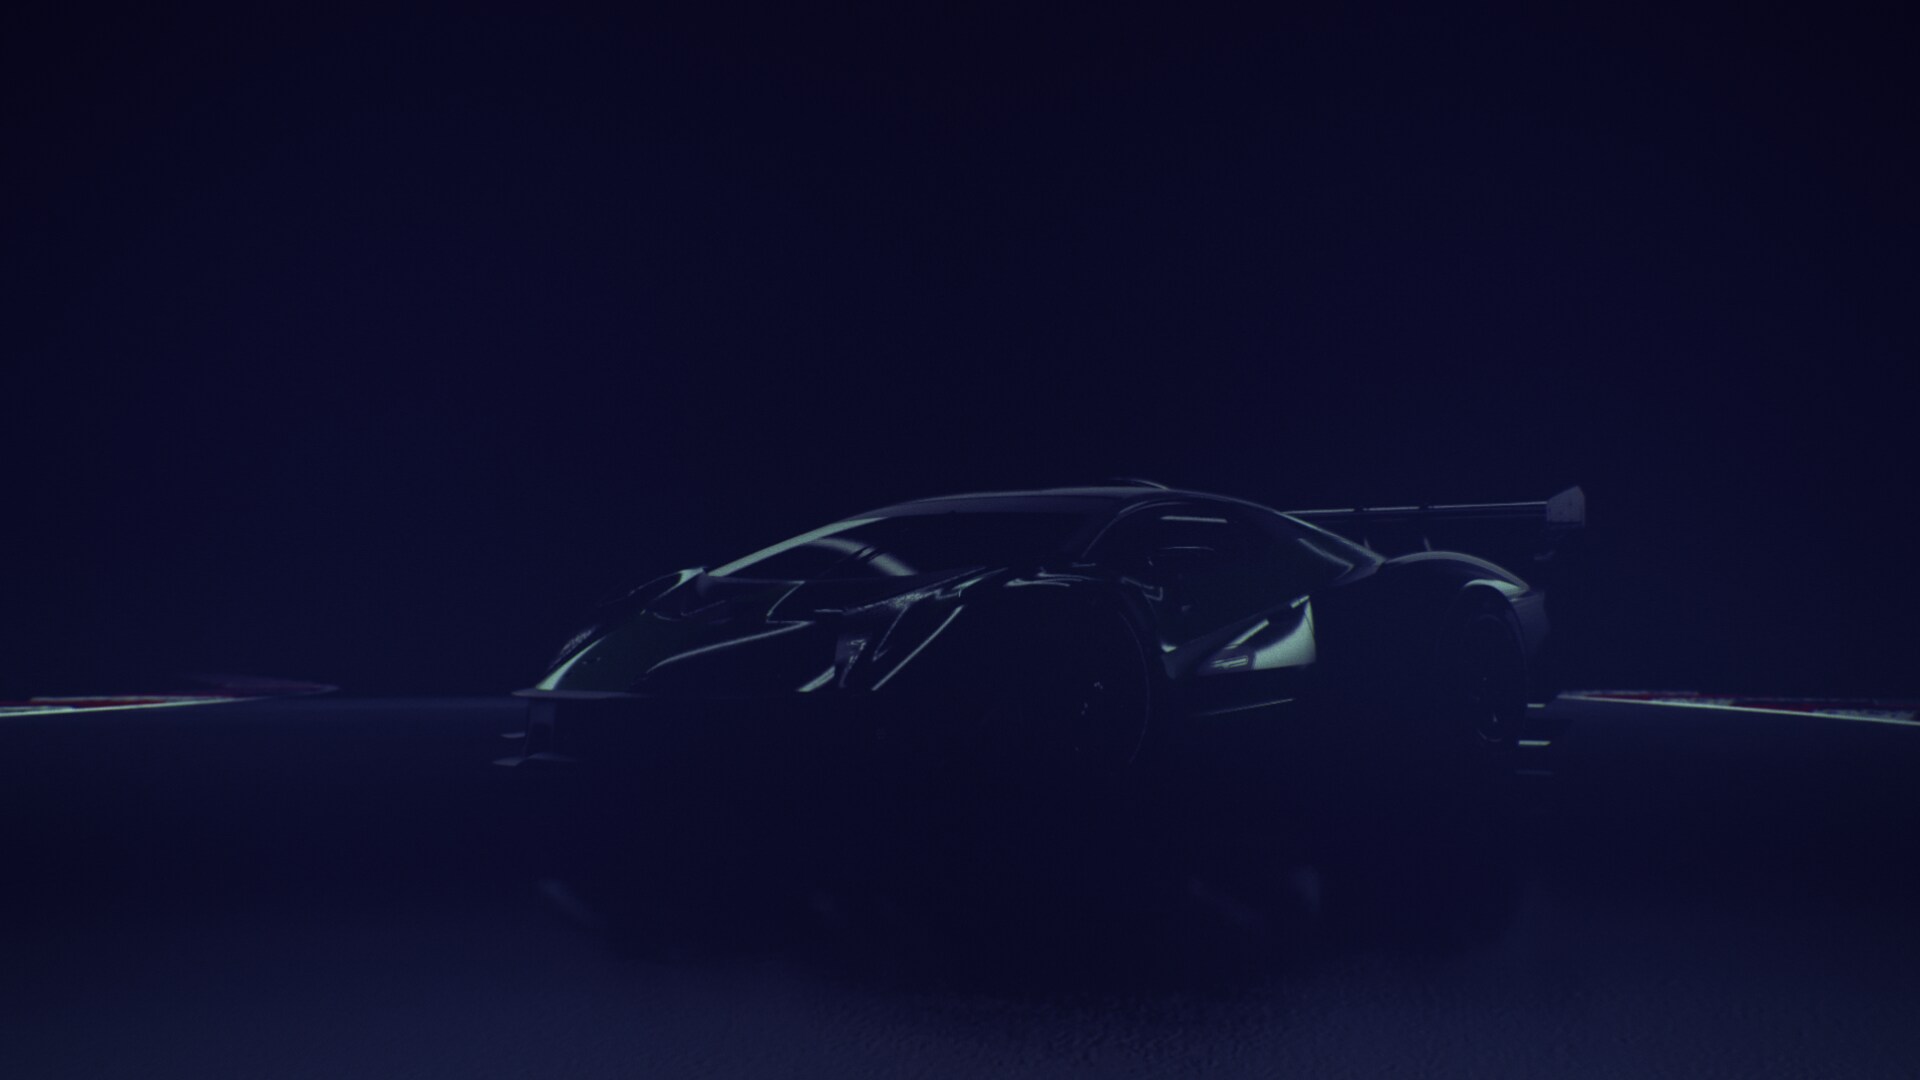 2020 Lamborghini V12 track hypercar teaser